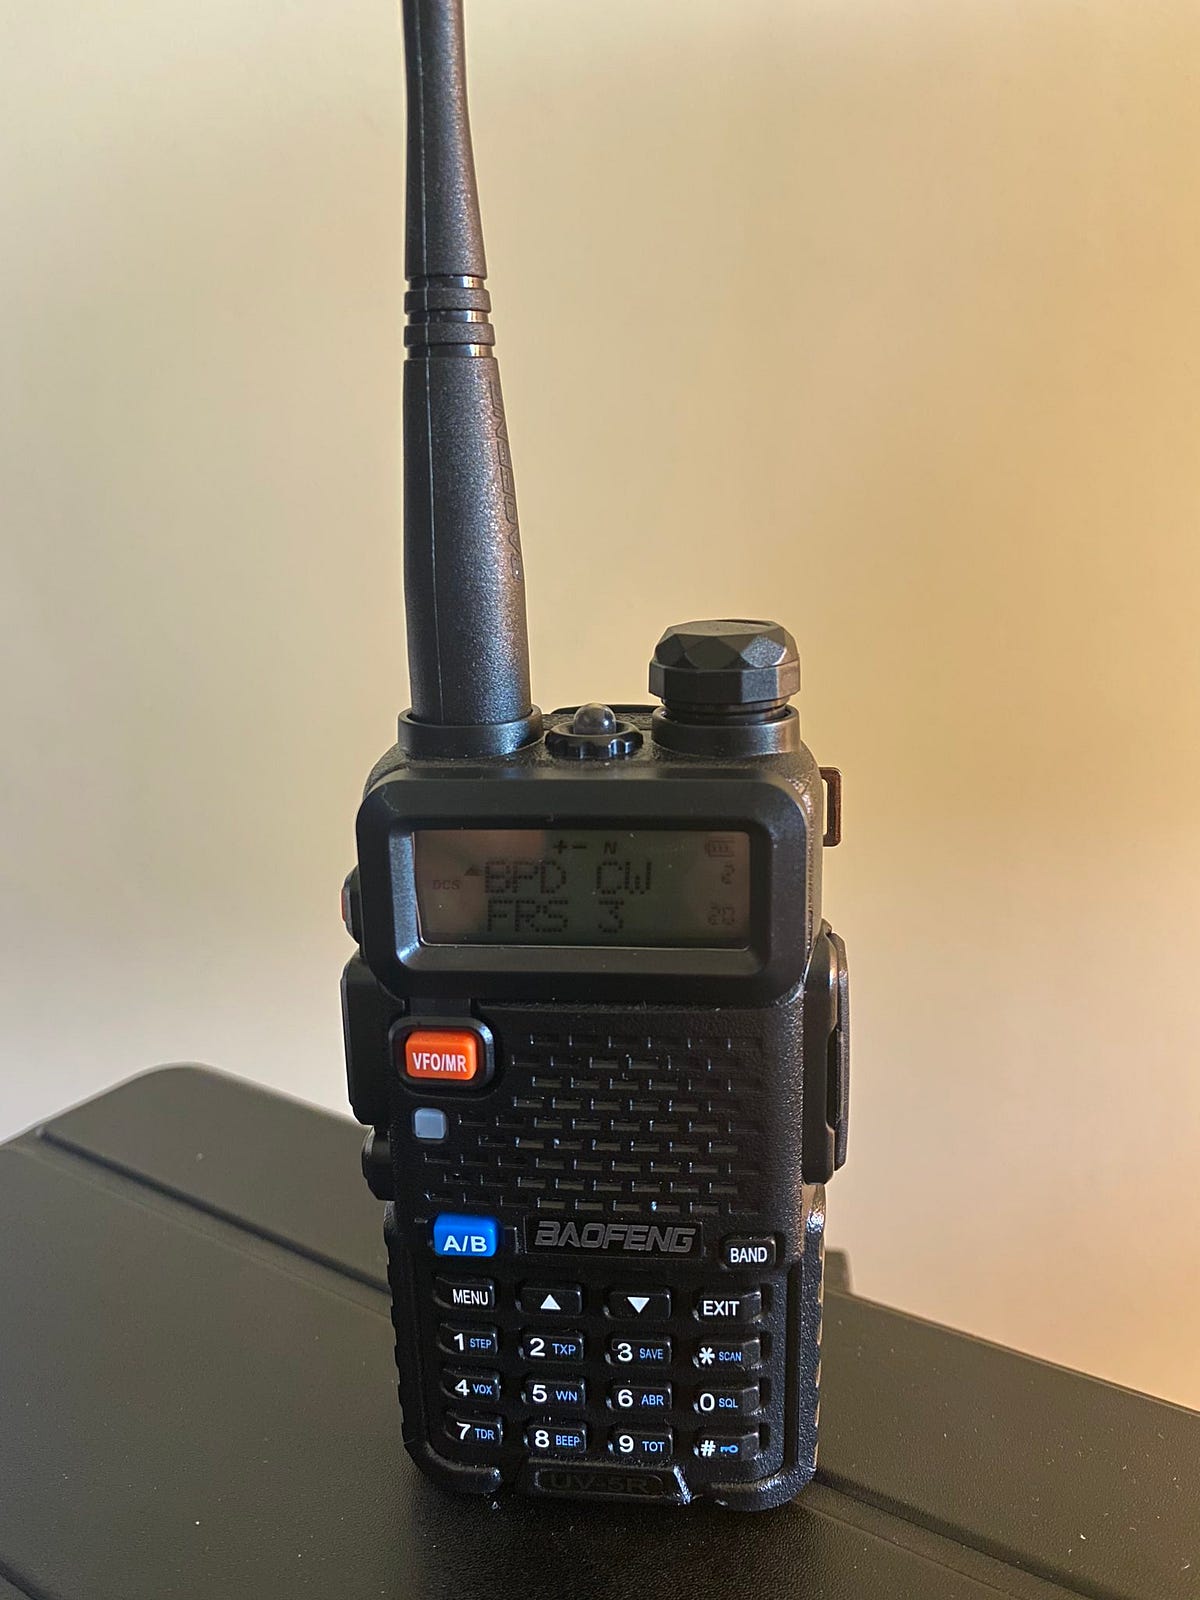 Baofeng UV-5R For Beginners - Menu Settings You Need To Know - Learn The Baofeng  UV5R - Ham Radio 